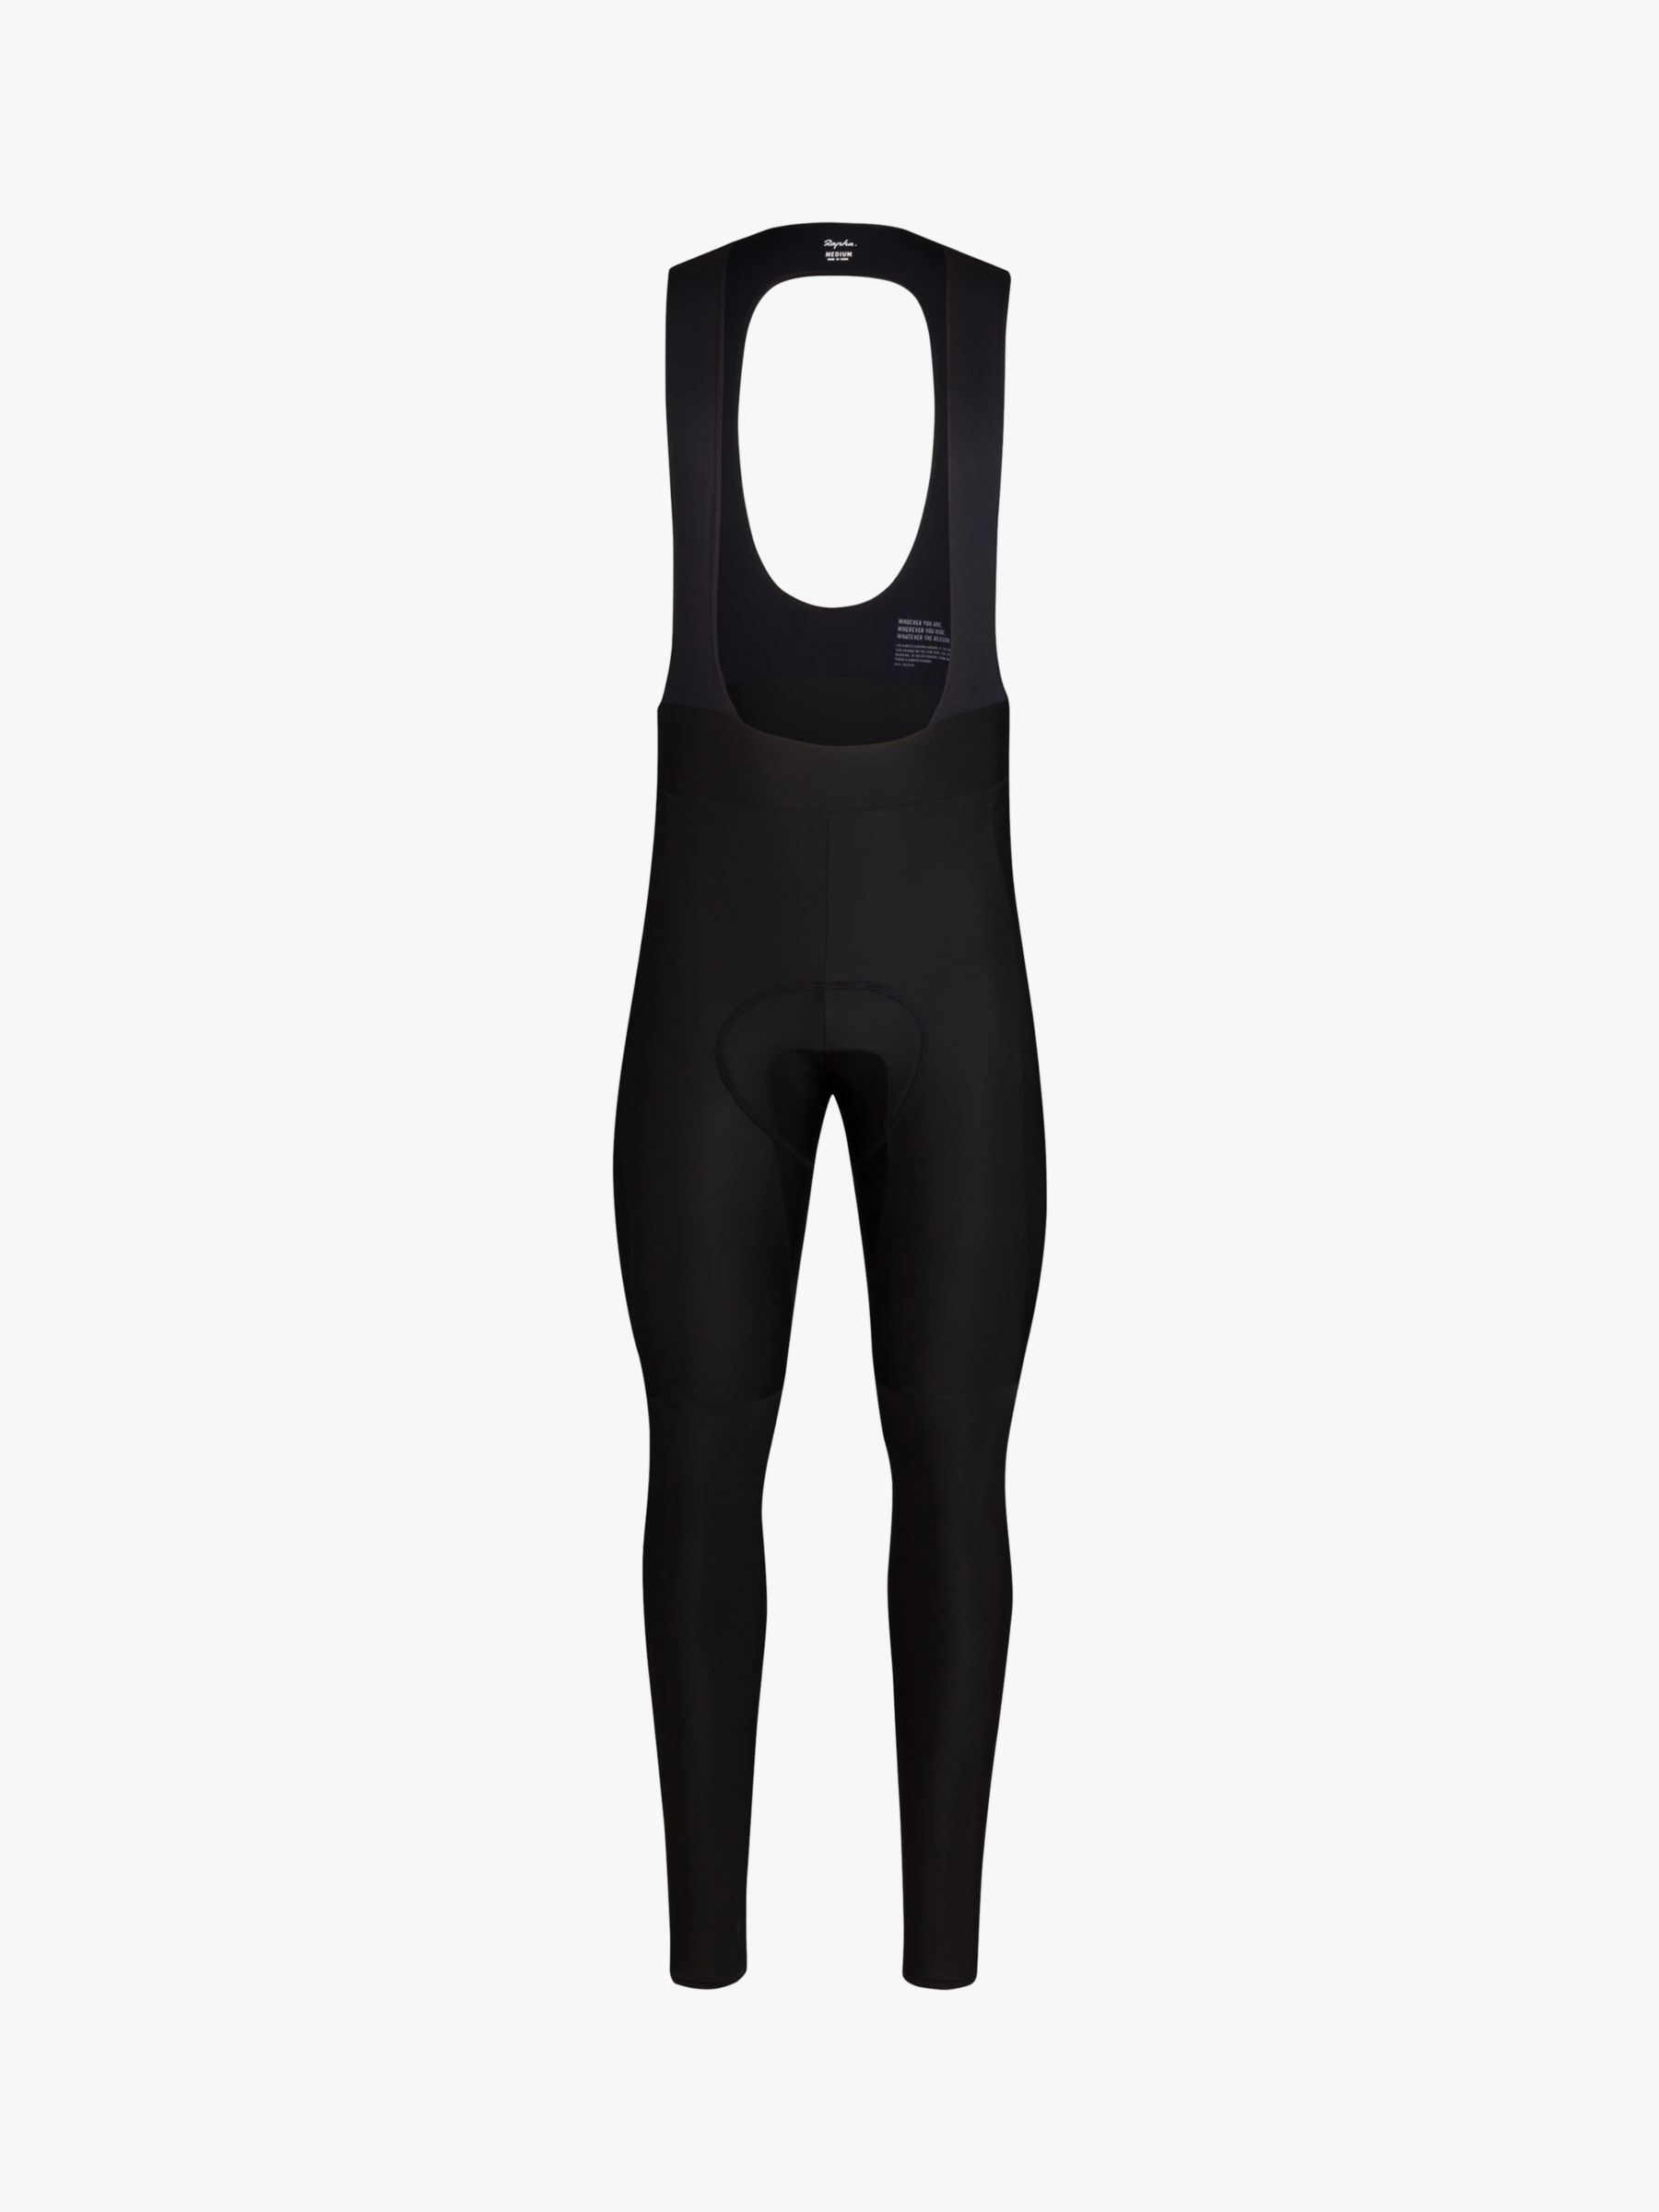 Berghaus basic core leggings in black